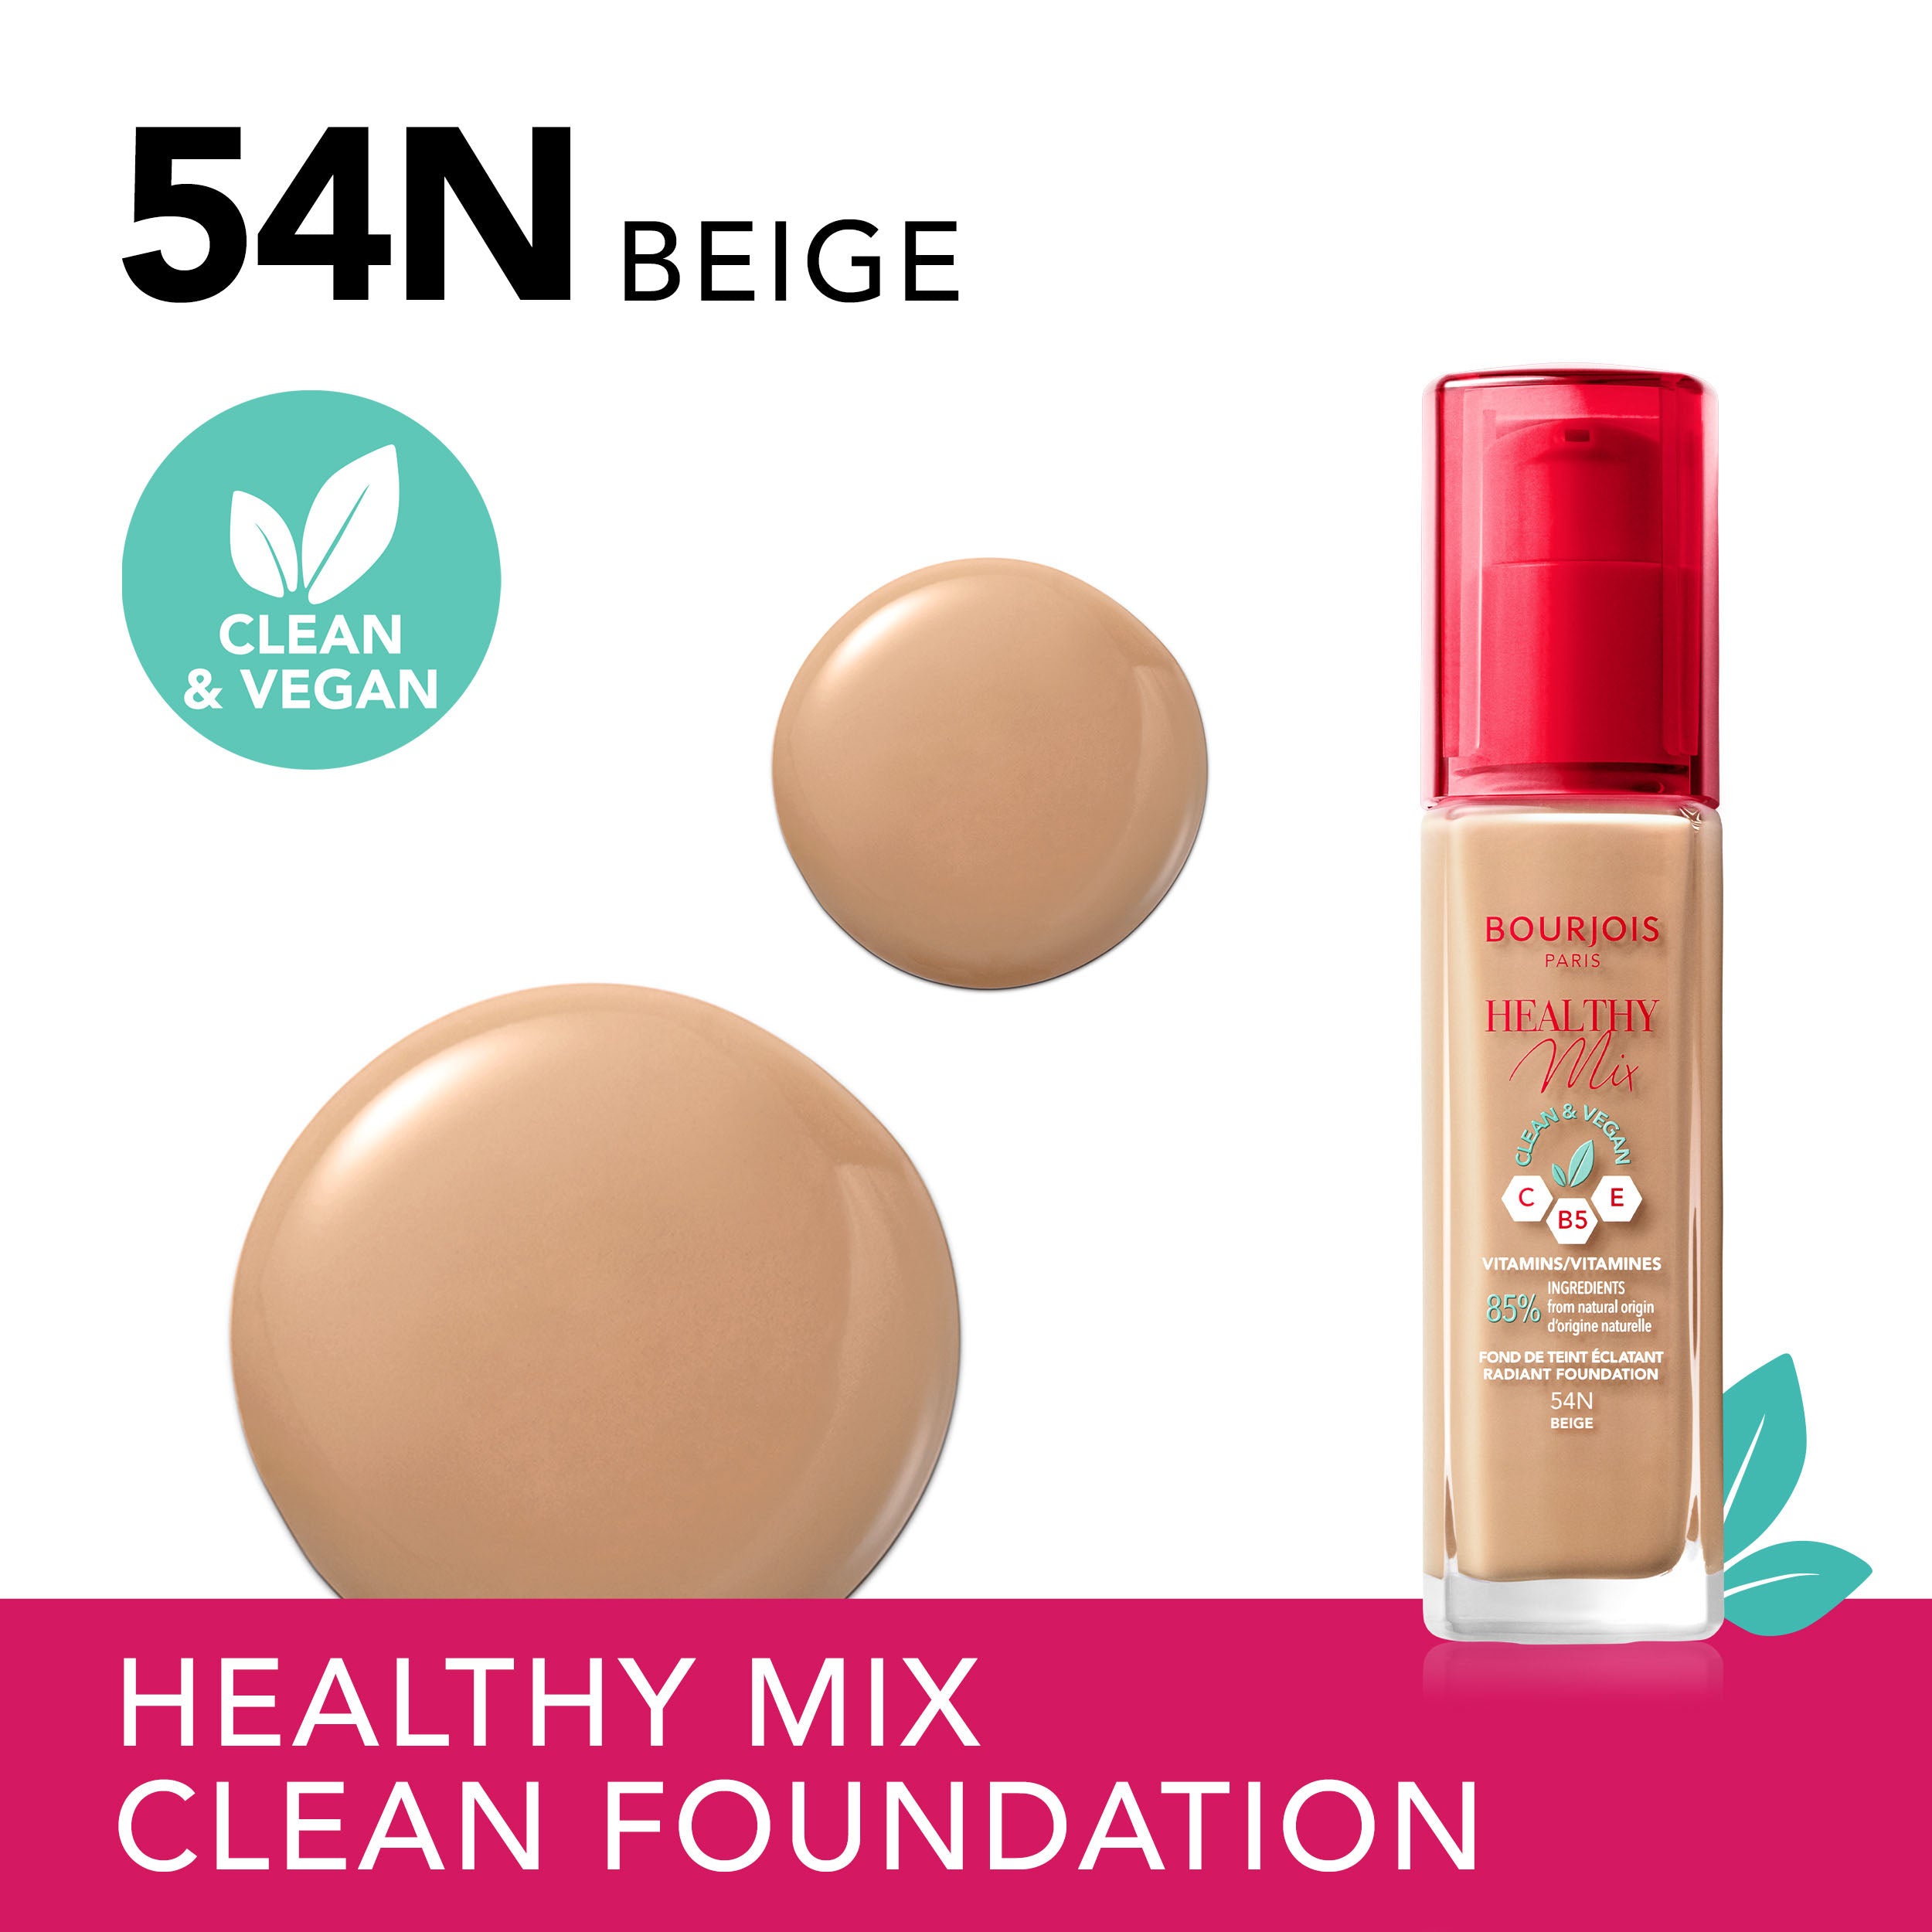 Healty mix clean foundation . 54N